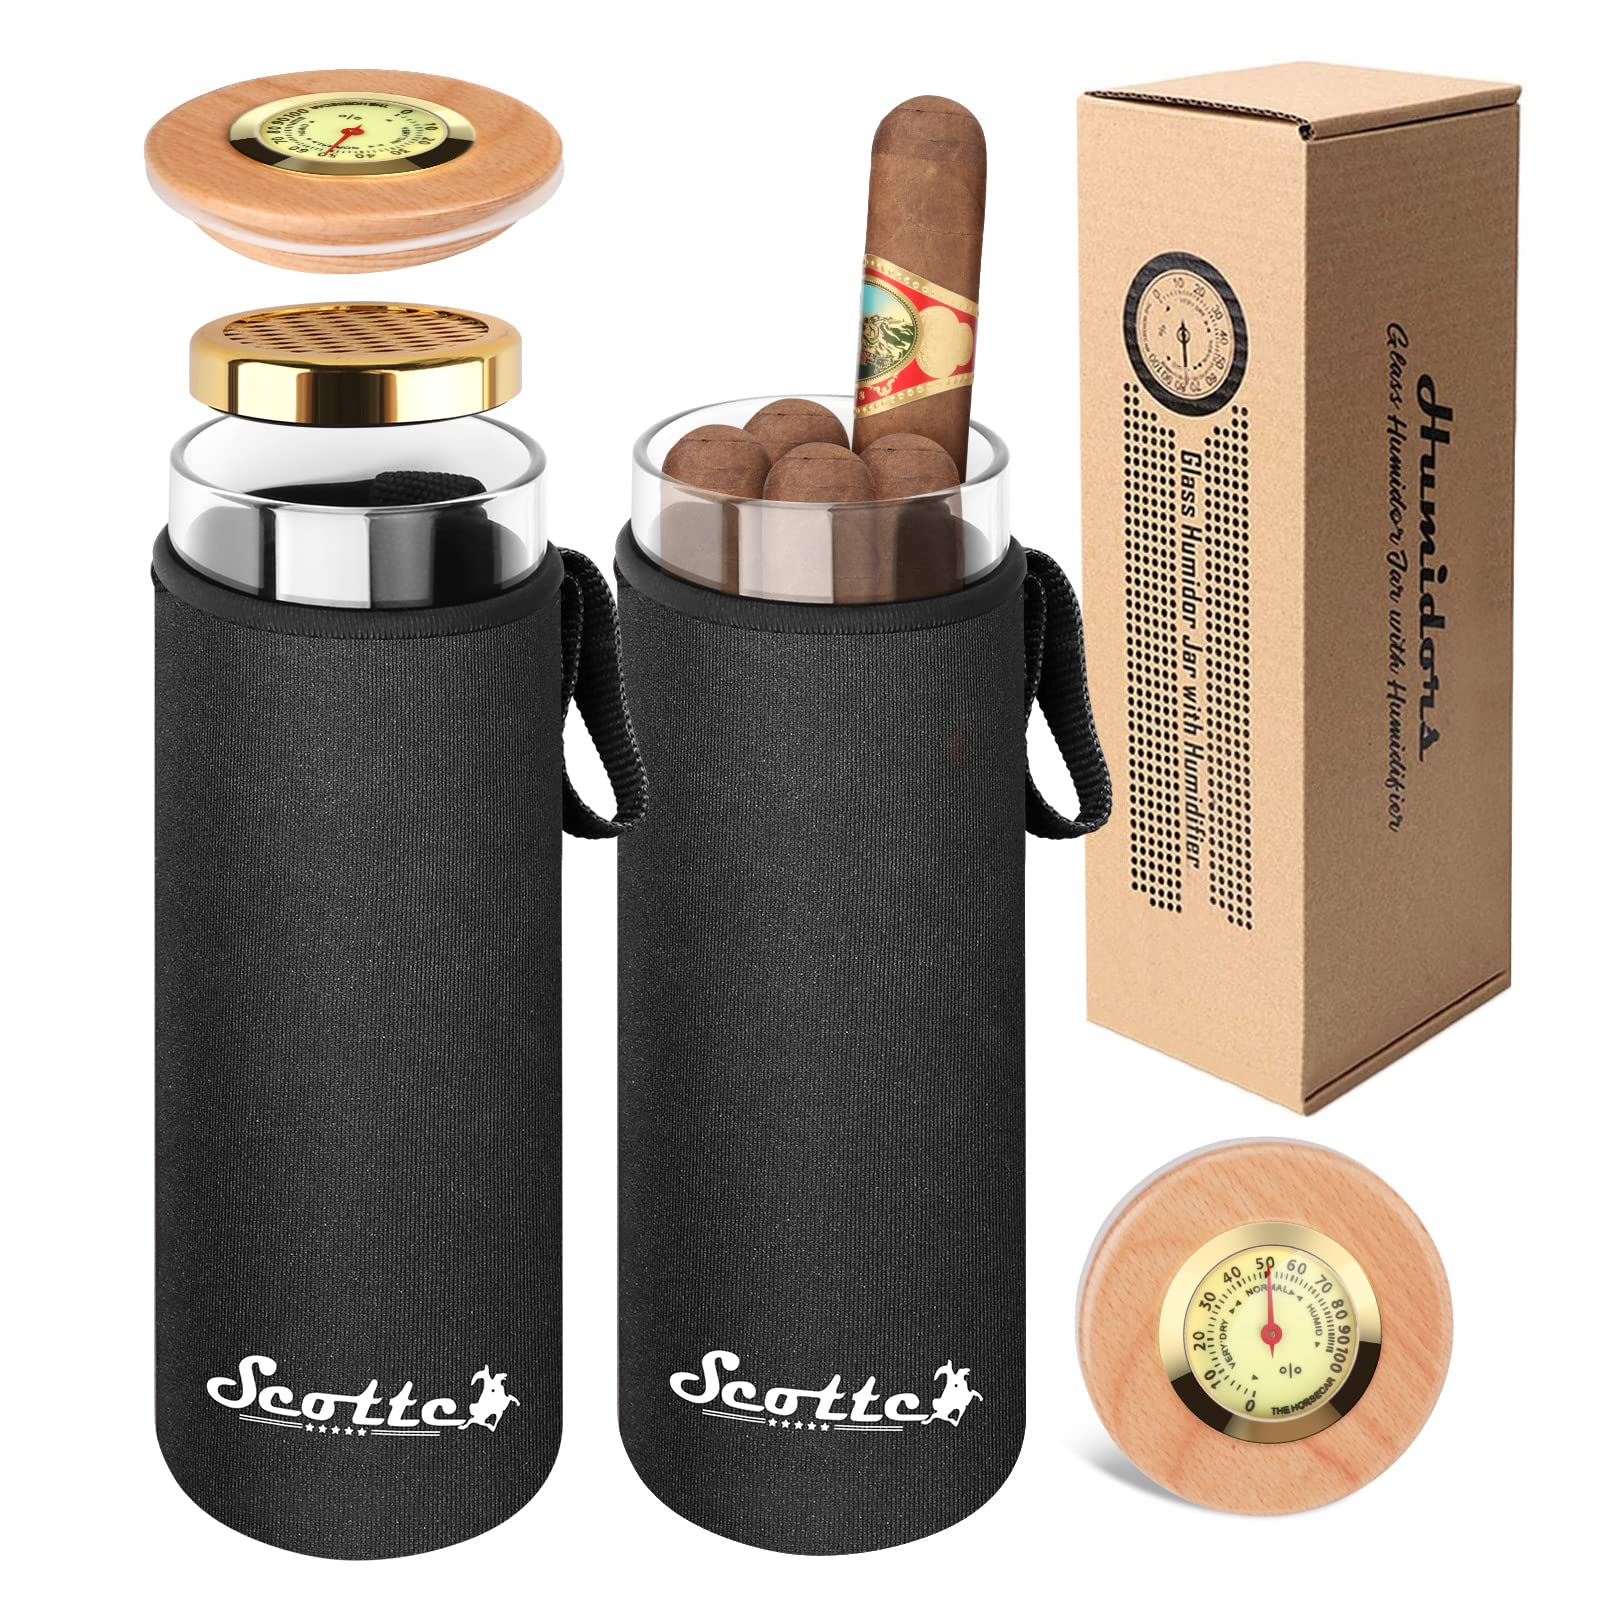 omhyggelig Væk Kvittering Scotte Cigar Case Humidor Gift Box Cigars jar humidifiers-Cigar Hygrometer  humidifier-Travel Cigar Tube for 4 to 5 Cigars (Black)